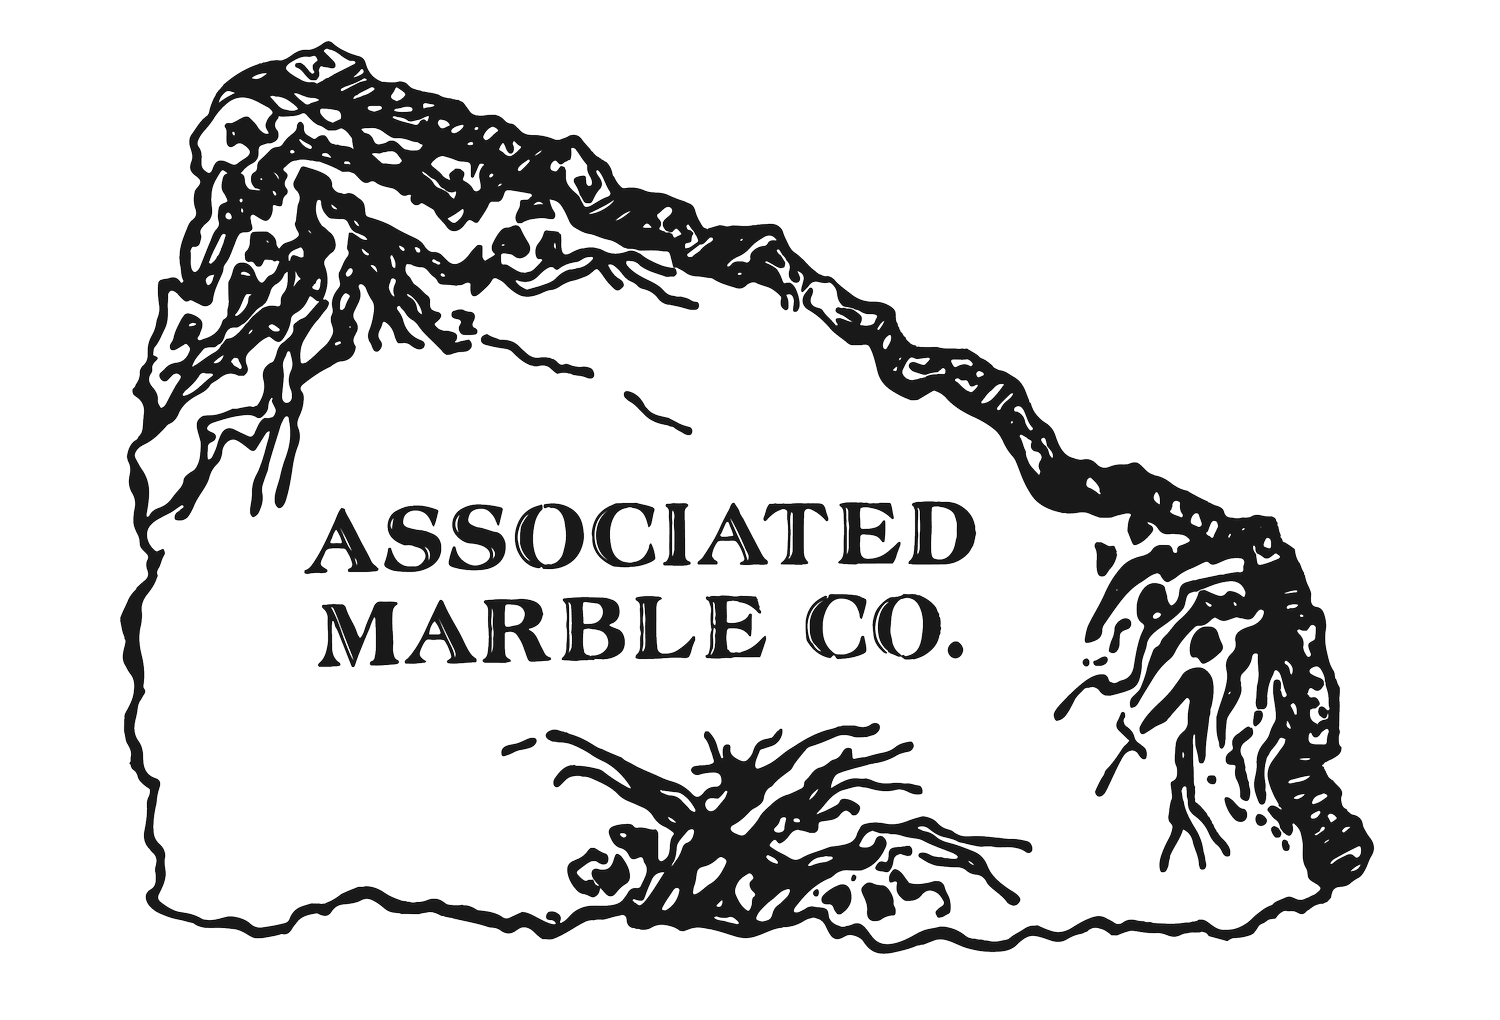 Associated Marble Company